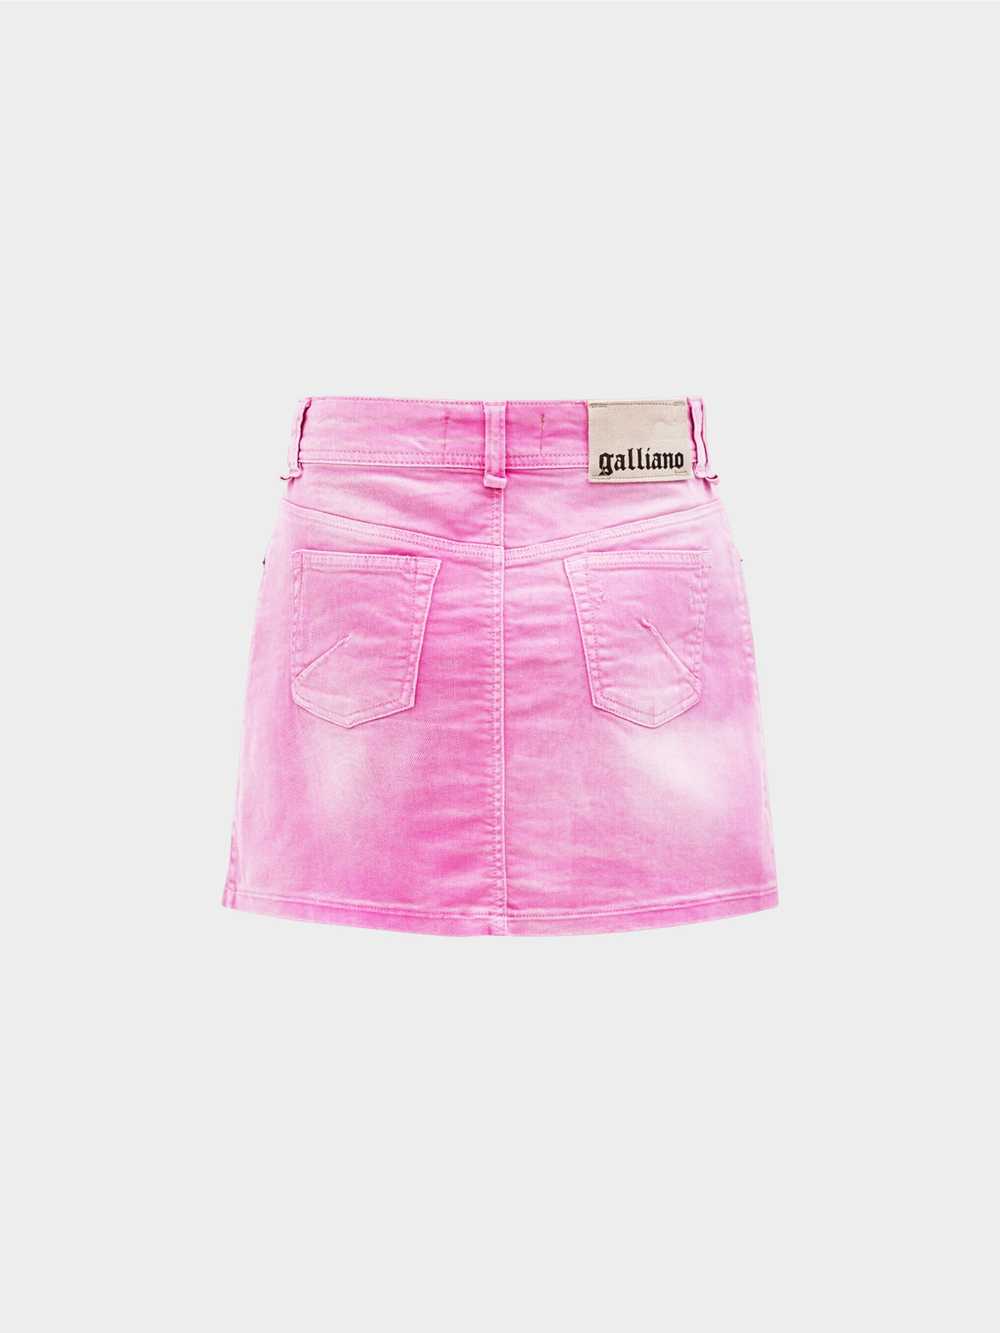 John Galliano 2000s Washed Pink Denim Mini Skirt - image 1